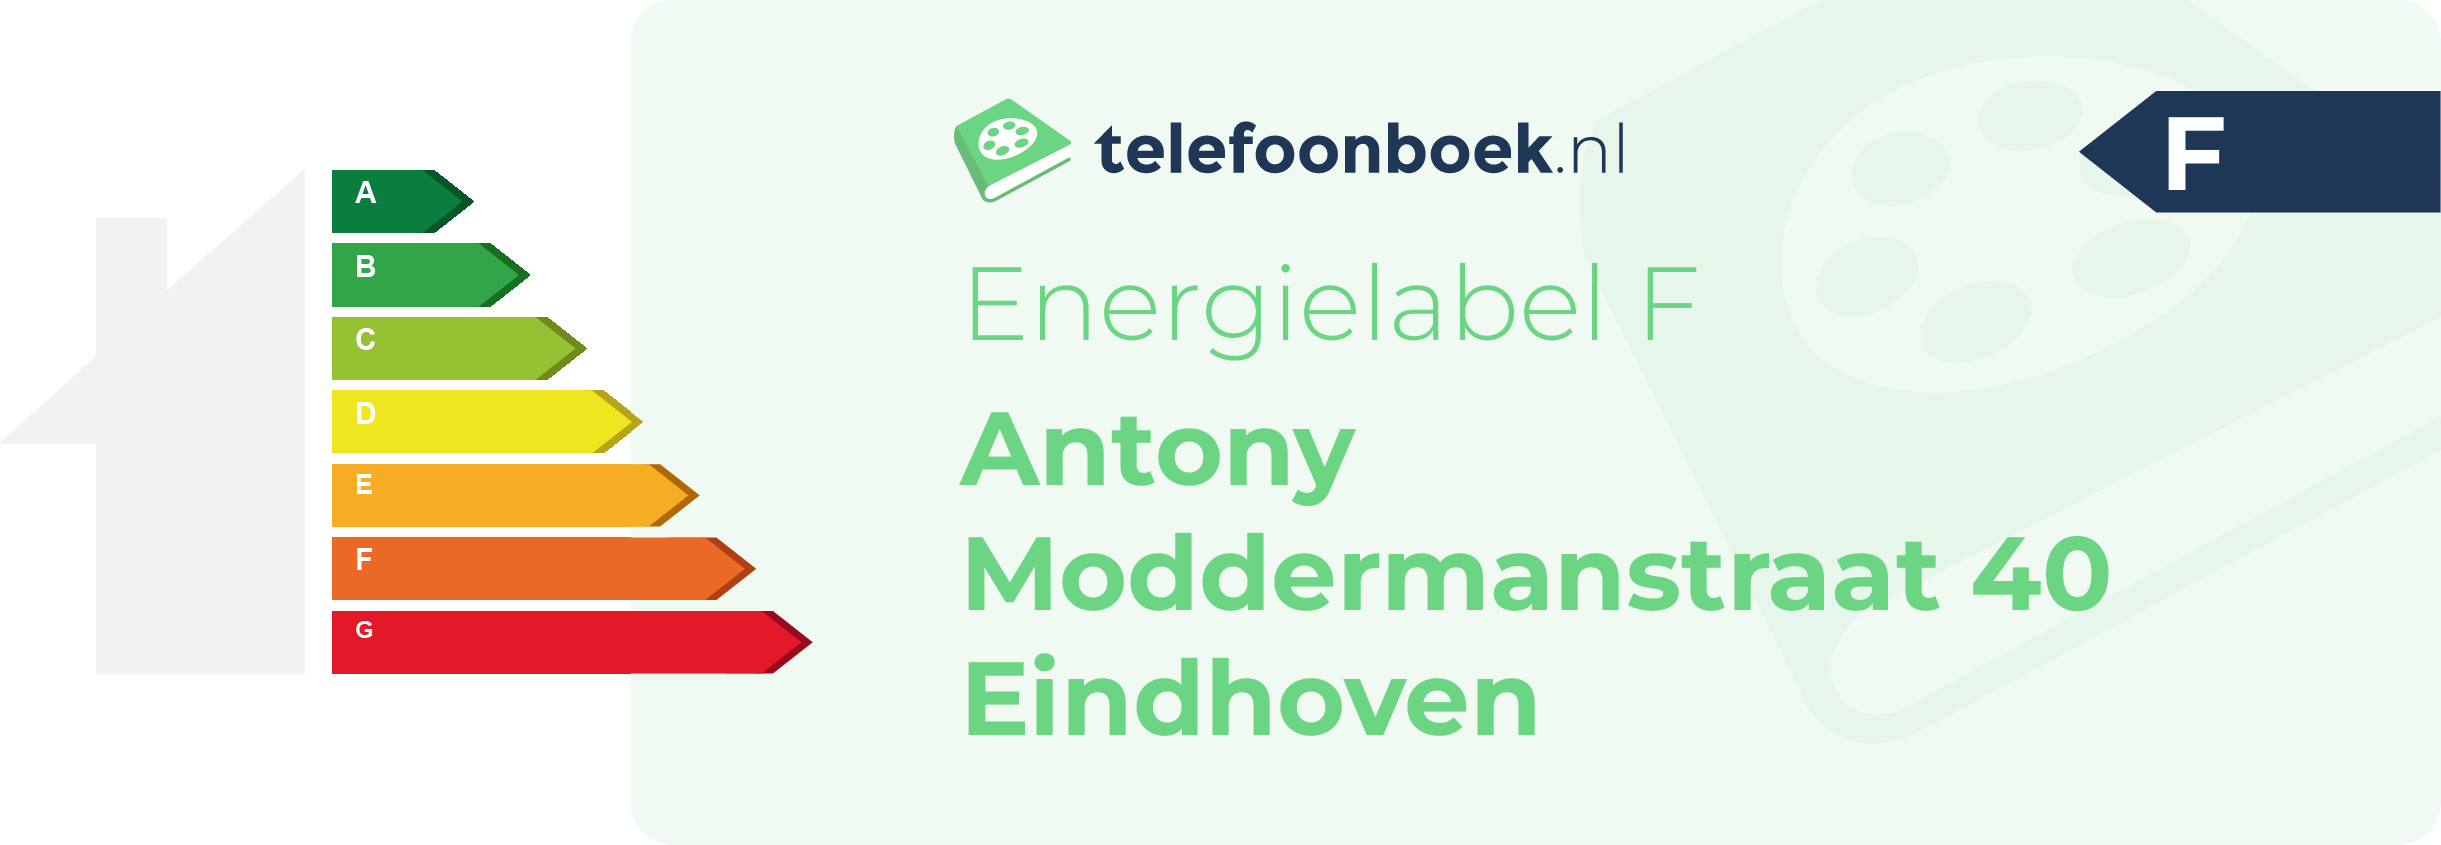 Energielabel Antony Moddermanstraat 40 Eindhoven